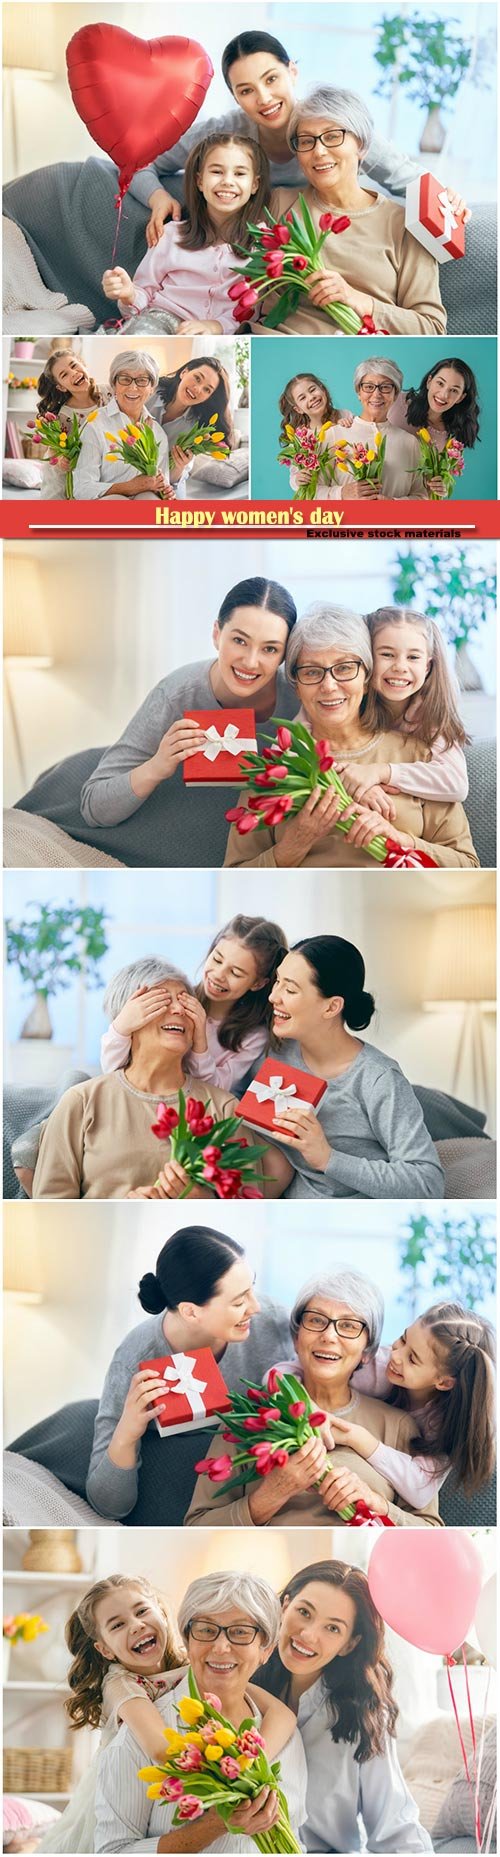 Happy women's day, grandma, mum and girl smiling and hugging